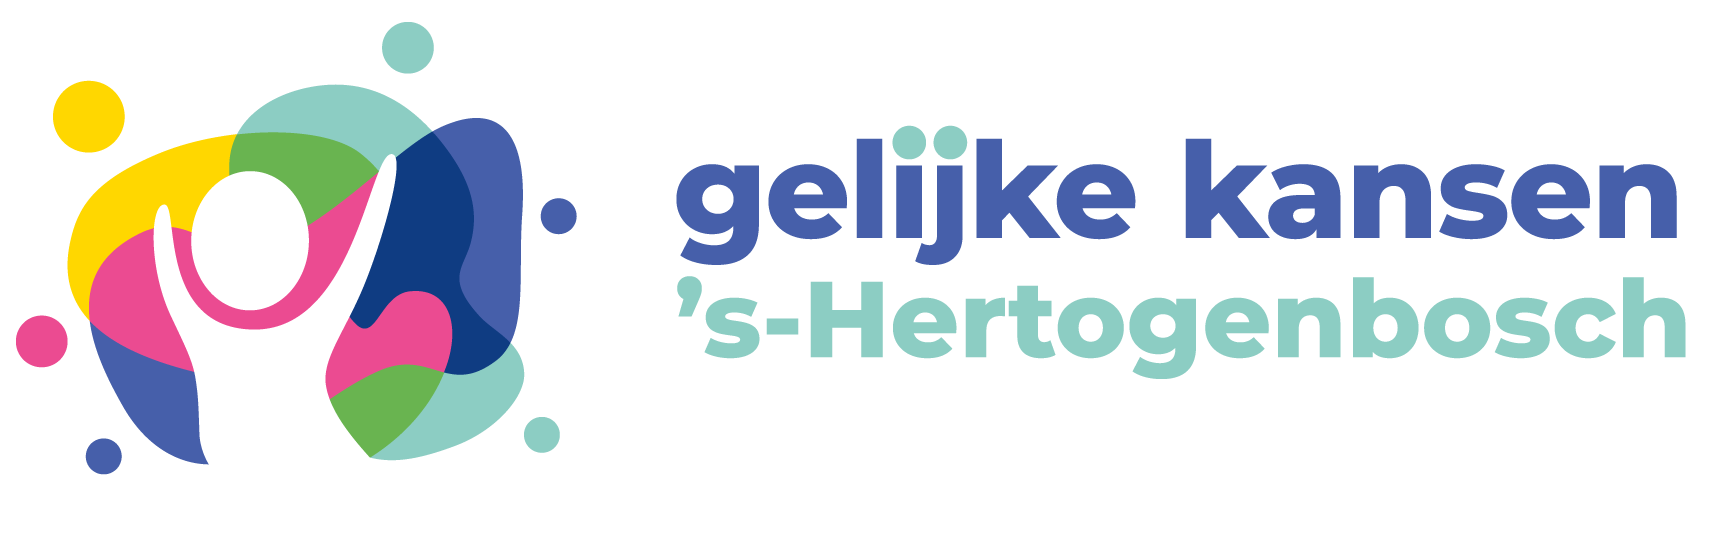 Gelijke Kansen 's-Hertogenbosch logo